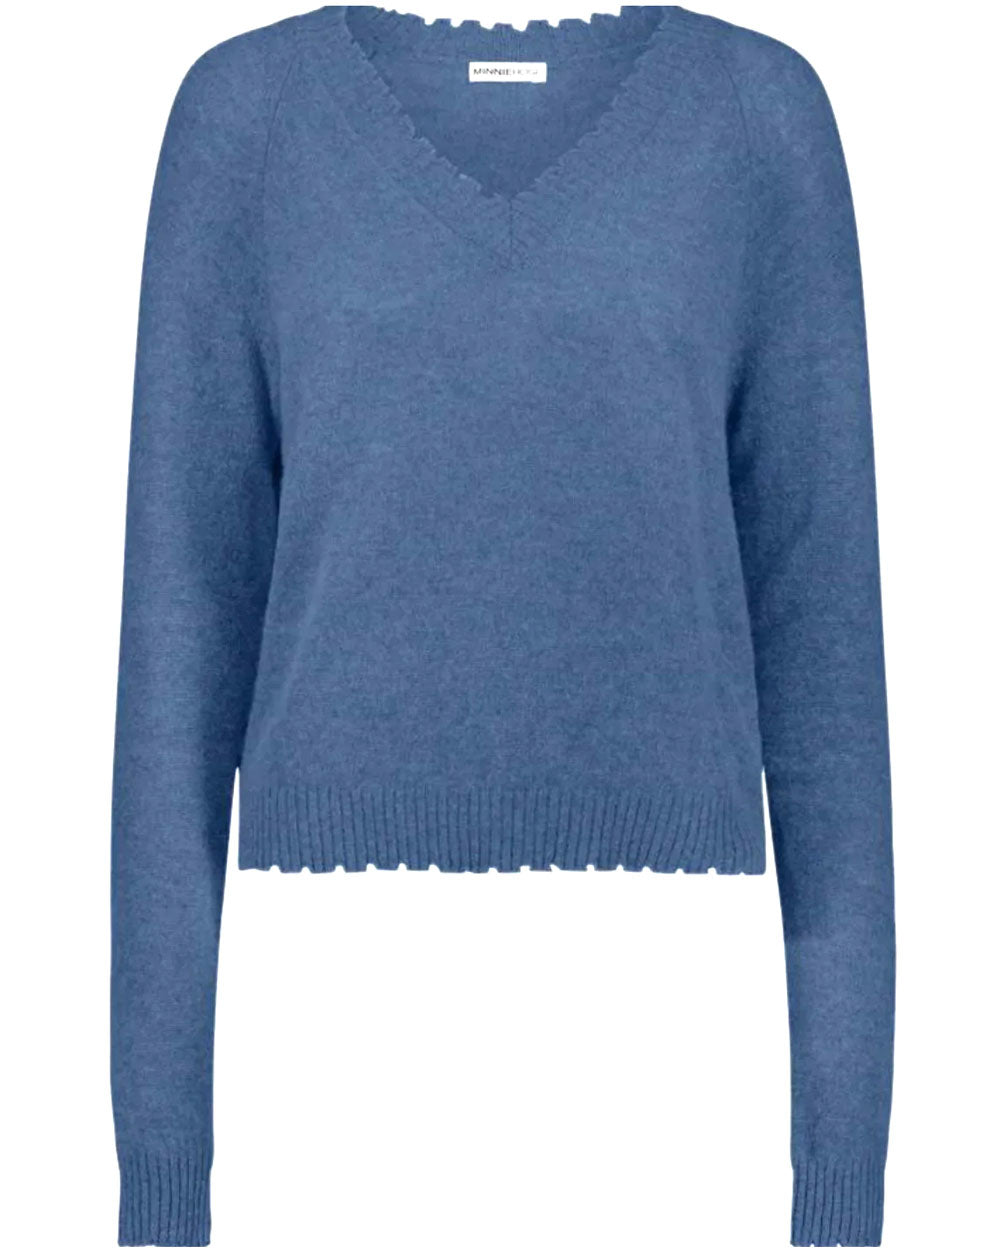 Harbour Blue Distressed V Neck Cashmere Sweater